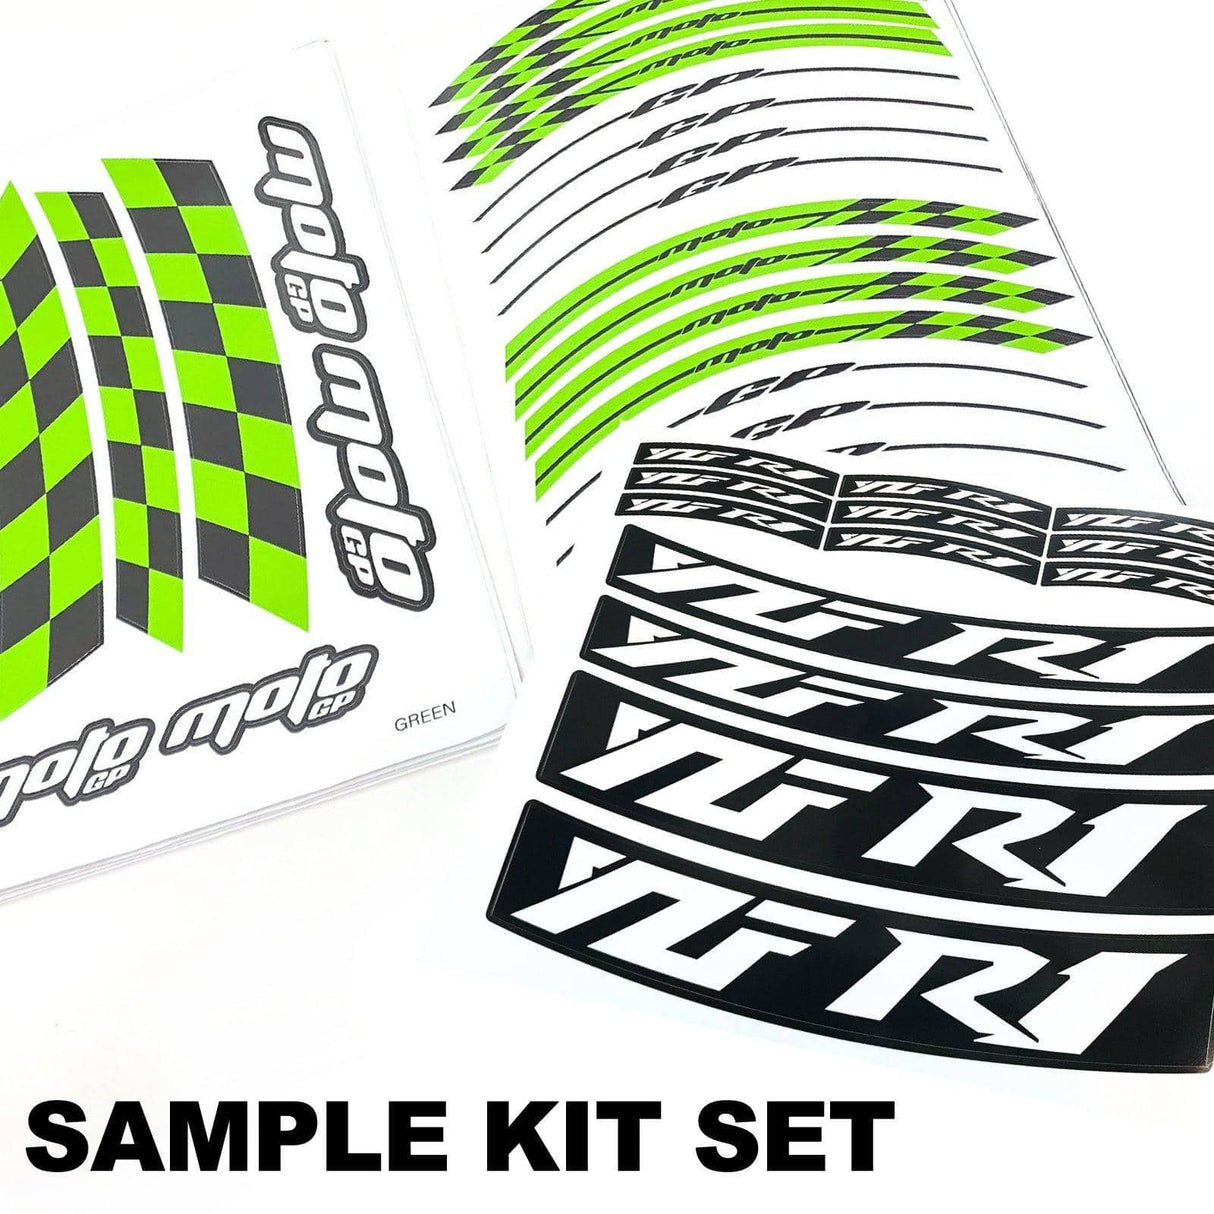 For Kawasaki Z400 Logo MOTO 17 inch Rim Wheel Stickers GP01 Racing Check.